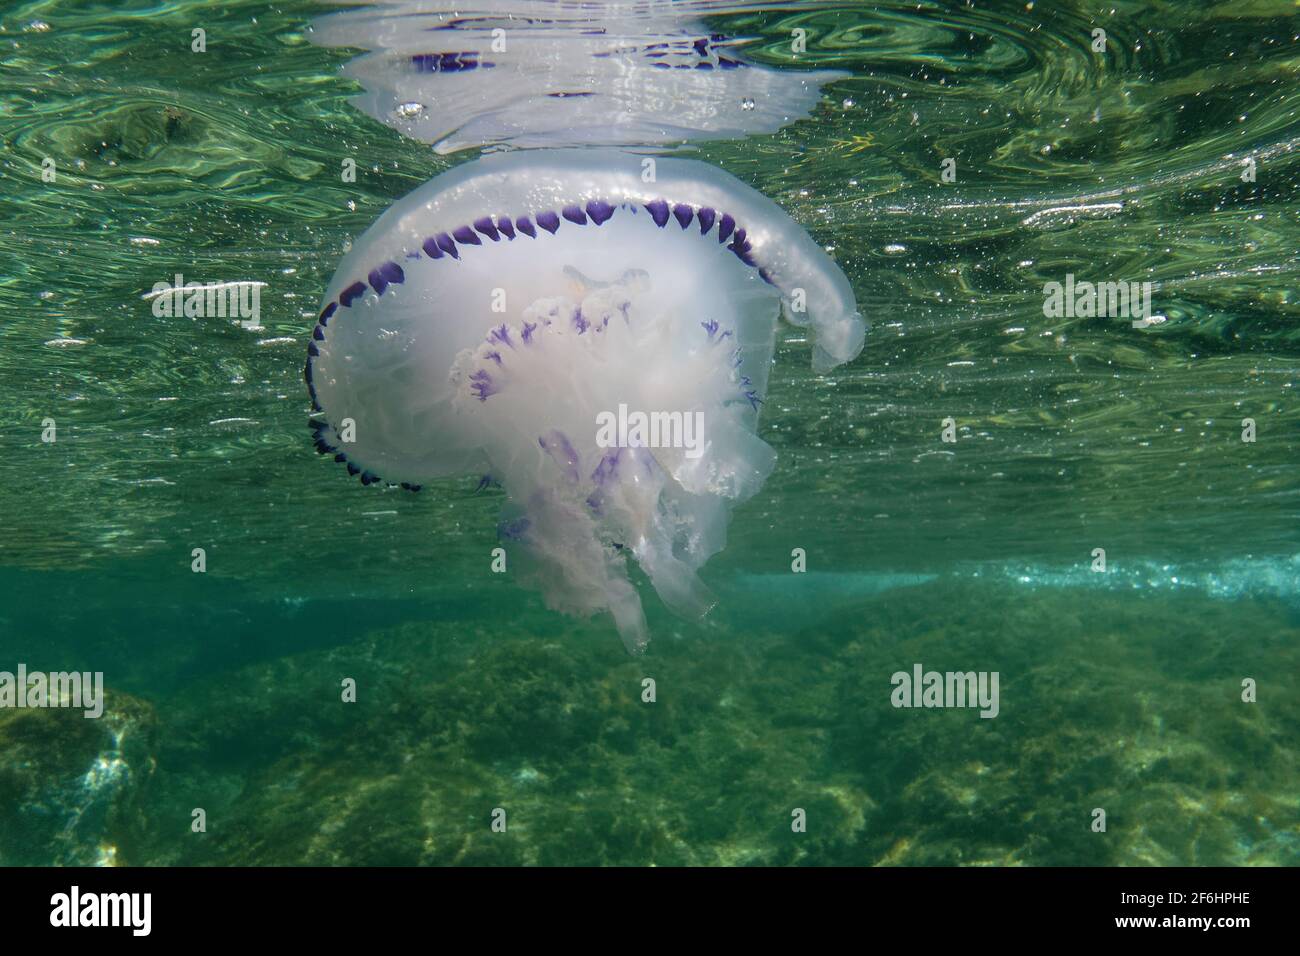 Rhizostome, Marigold or Dustbin-lid jellyfish (Rhizostoma pulmo) Stock Photo